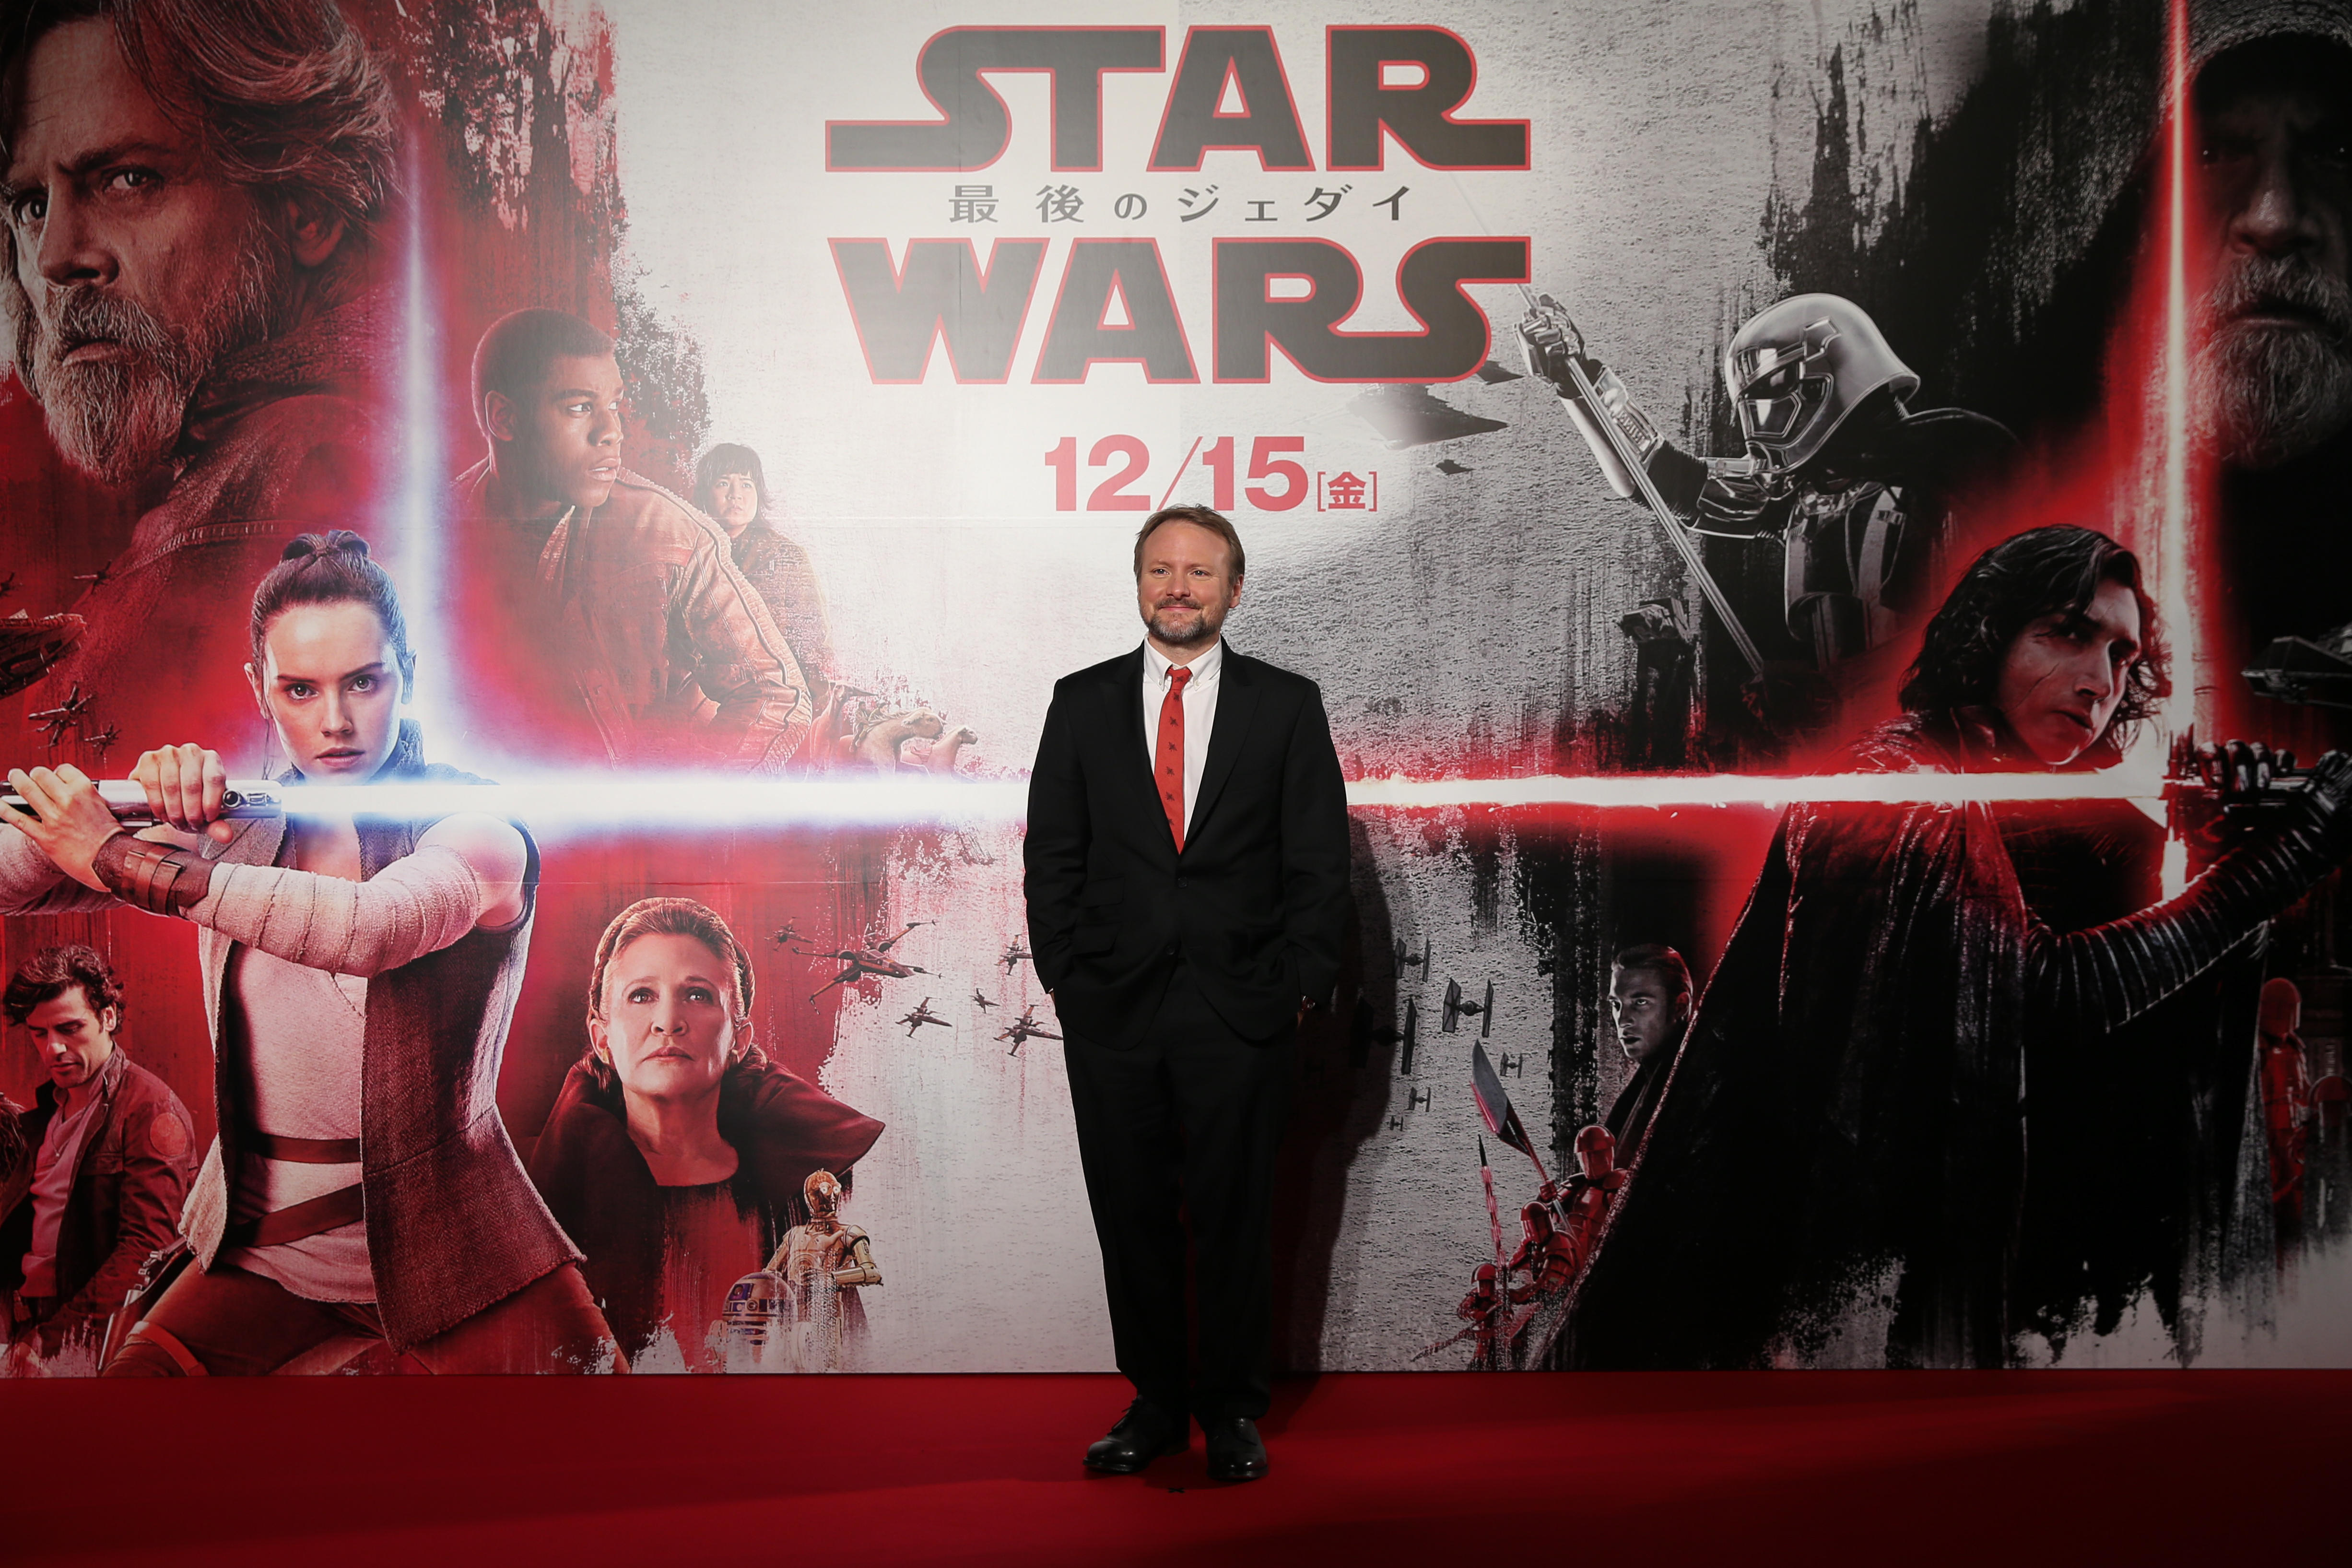 Last Jedi director Rian Johnson reviews Solo: A Star Wars Story